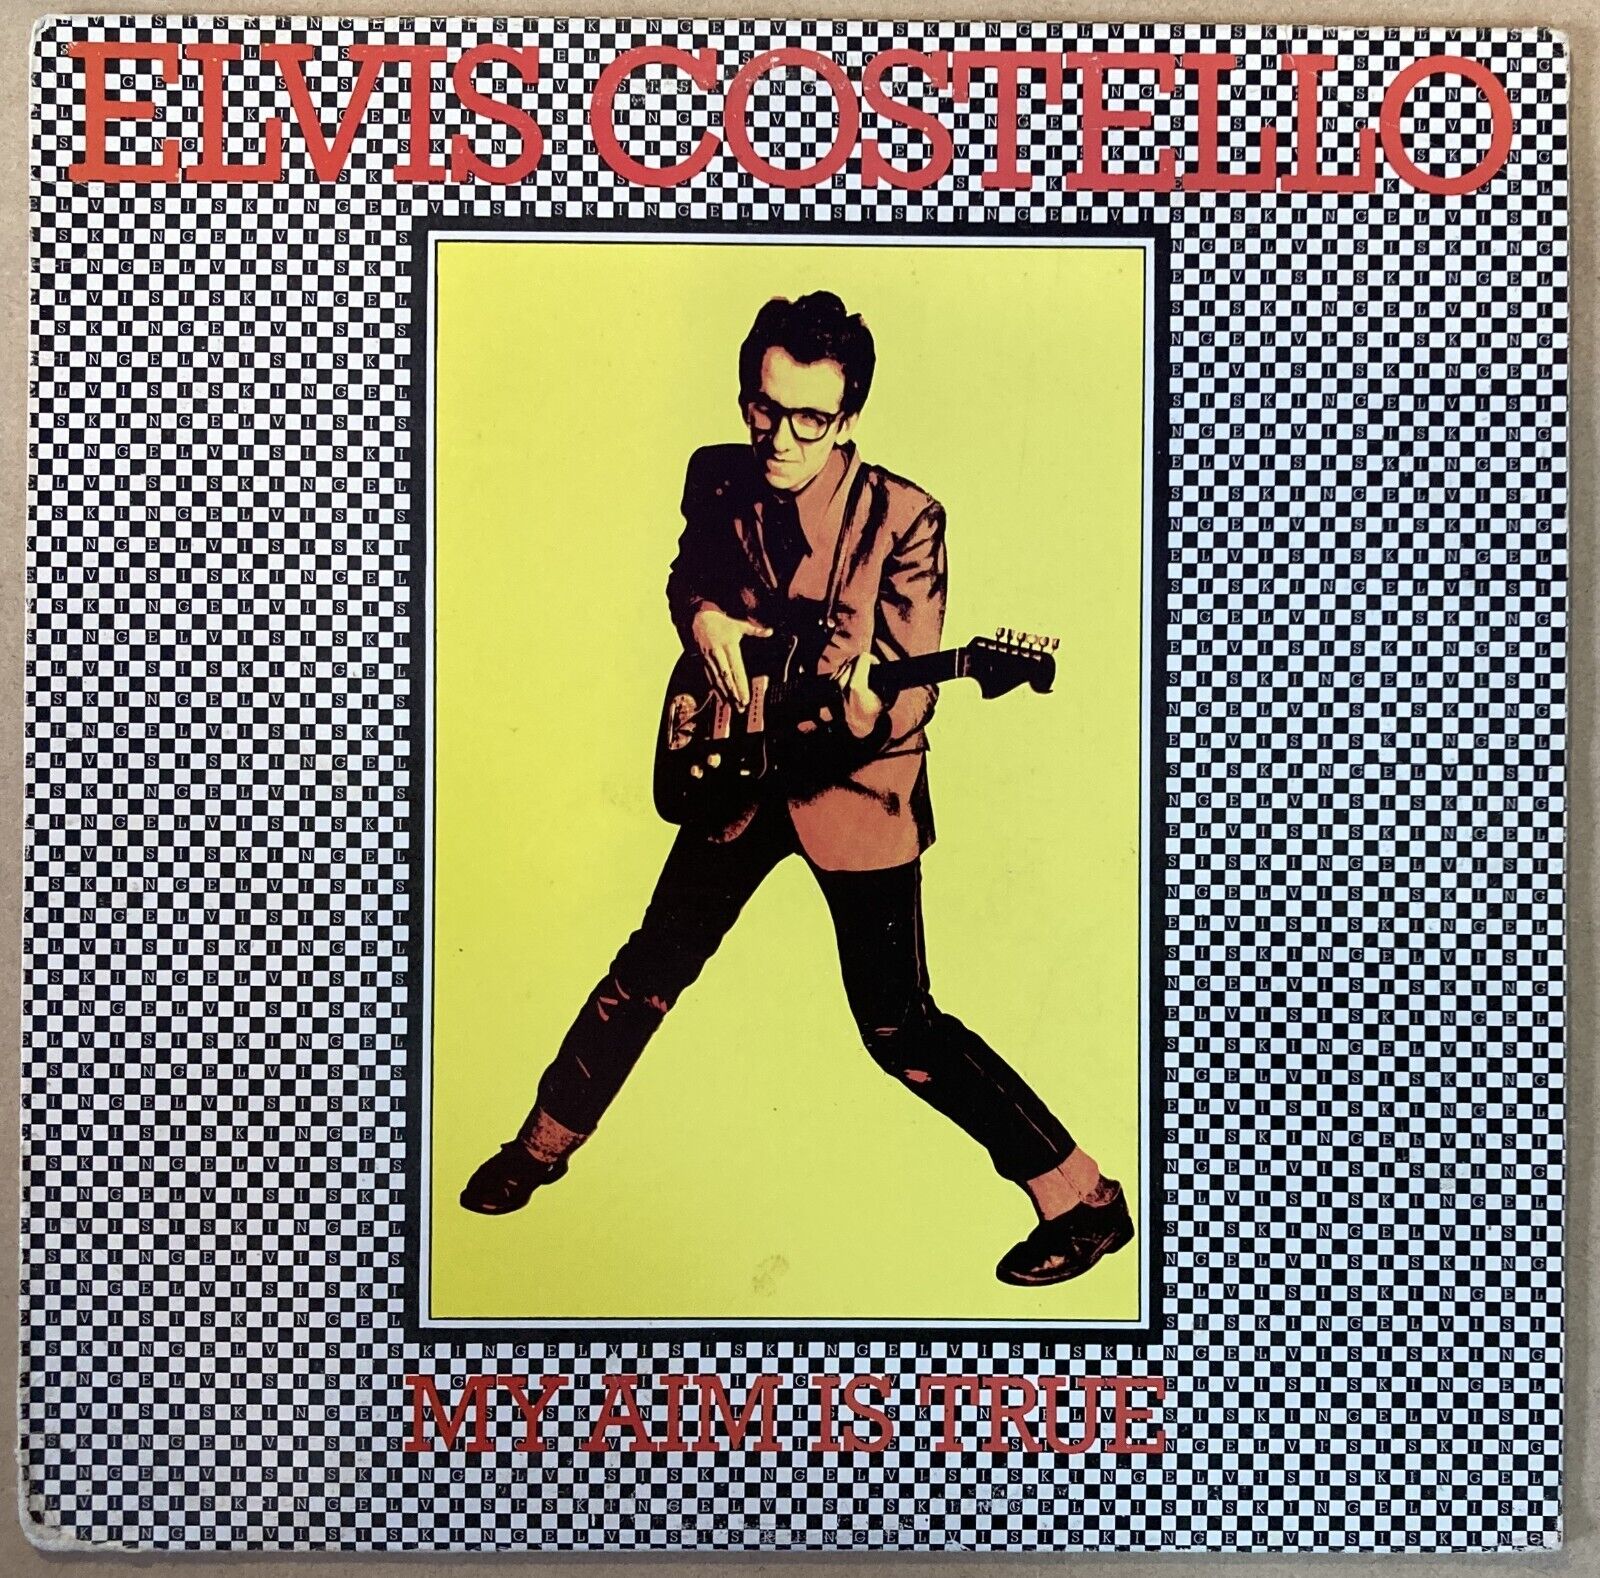 Elvis Costello - My Aim is True, Vinyl, JC 35037, 1978 Pitman repress, VG/VG